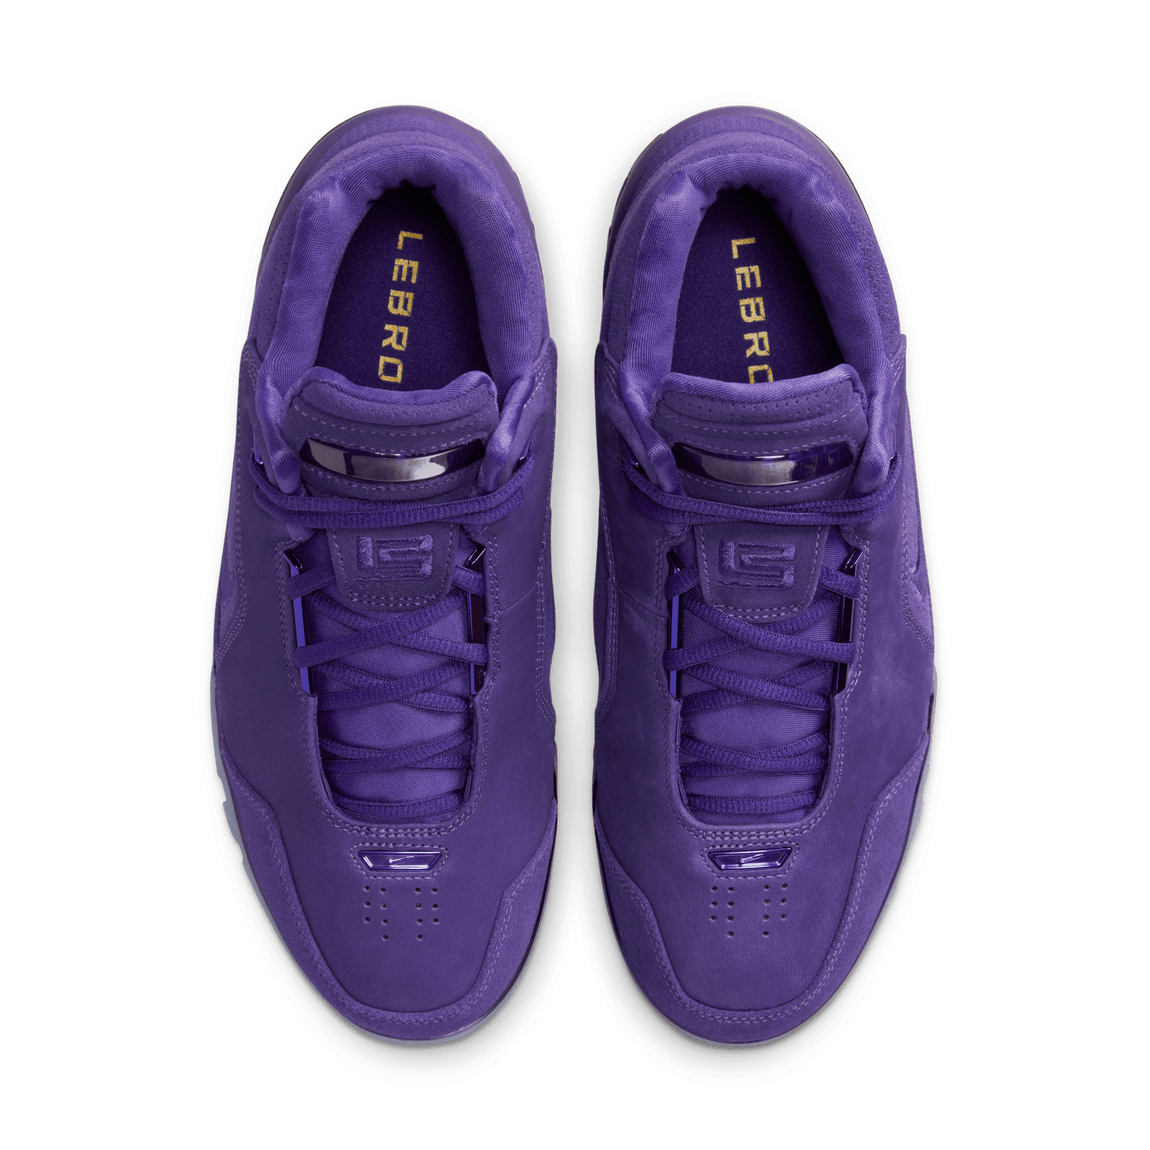 Nike Air Zoom Generation (Court Purple) 6/21 - Nike Air Zoom Generation (Court Purple) 6/21 - 